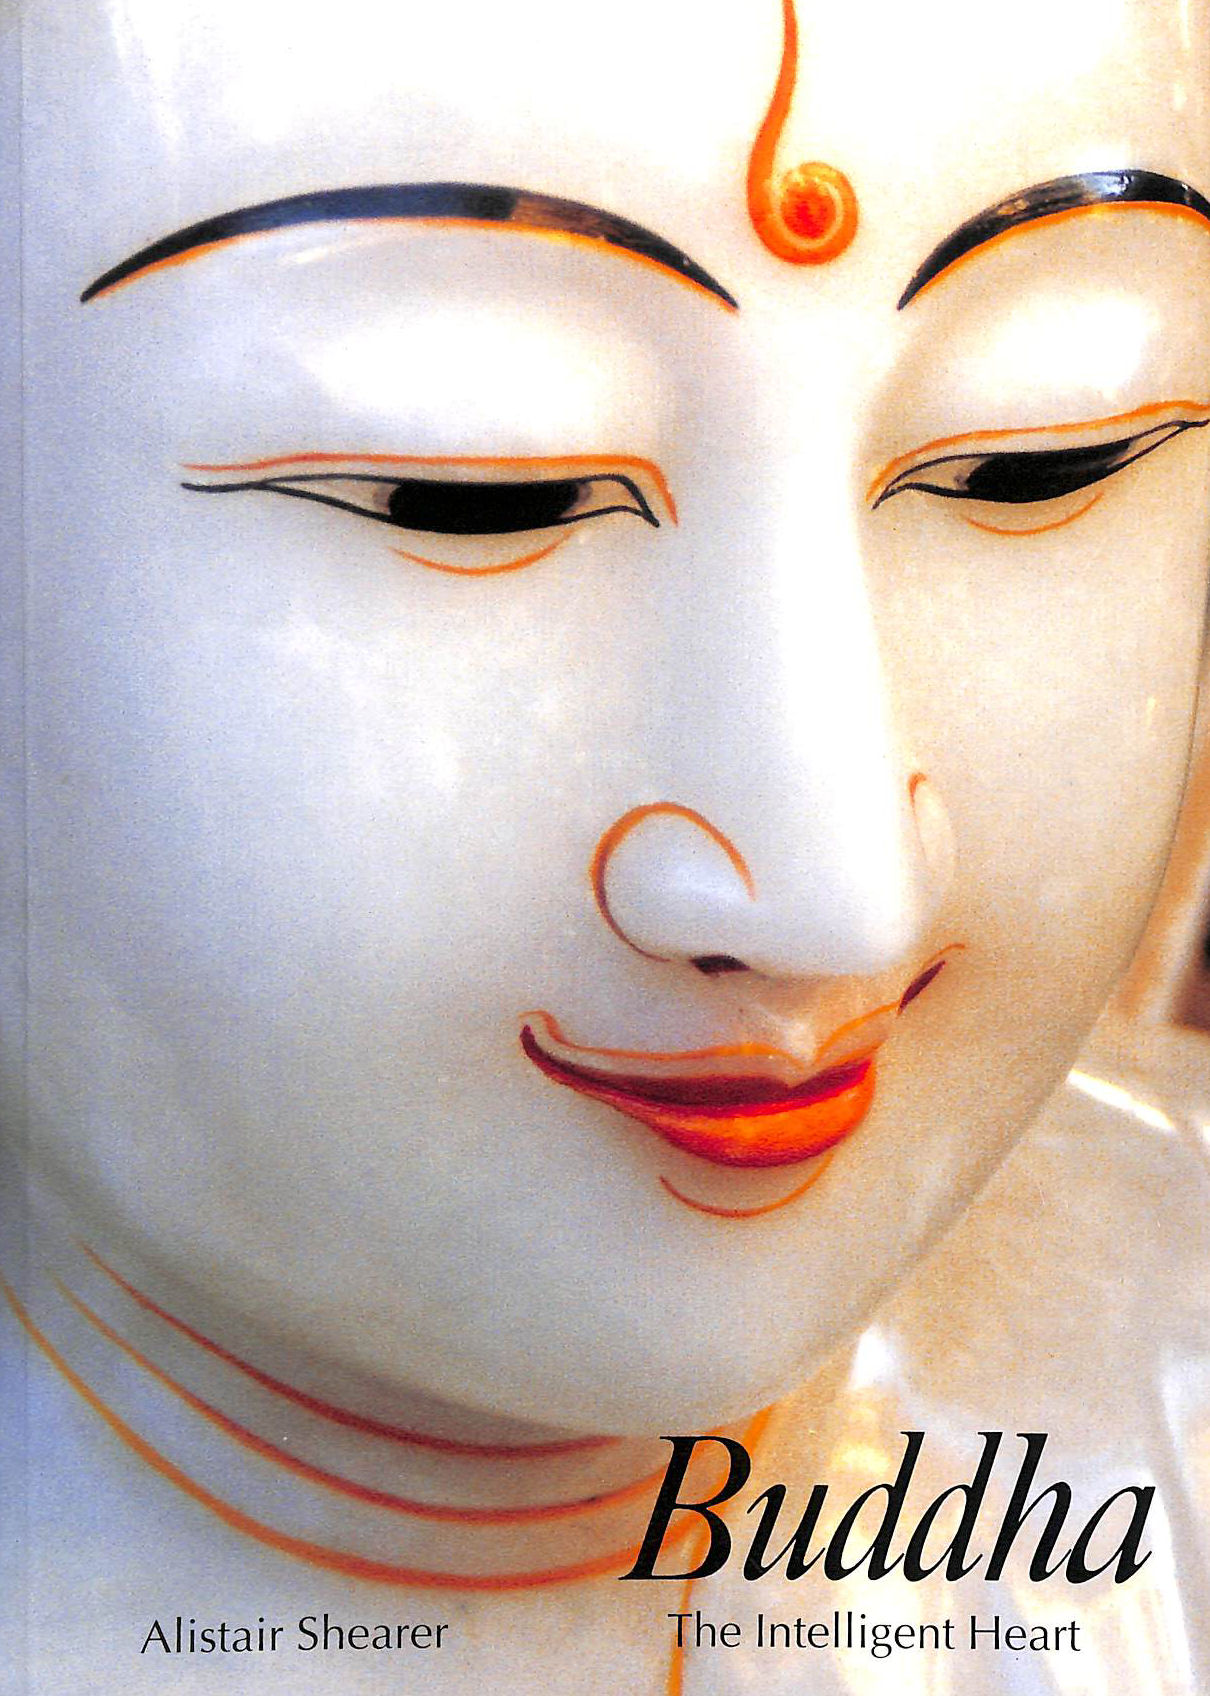 ALISTAIR SHEARER - Buddha: The Intelligent Heart: 0000 (Art and Imagination)